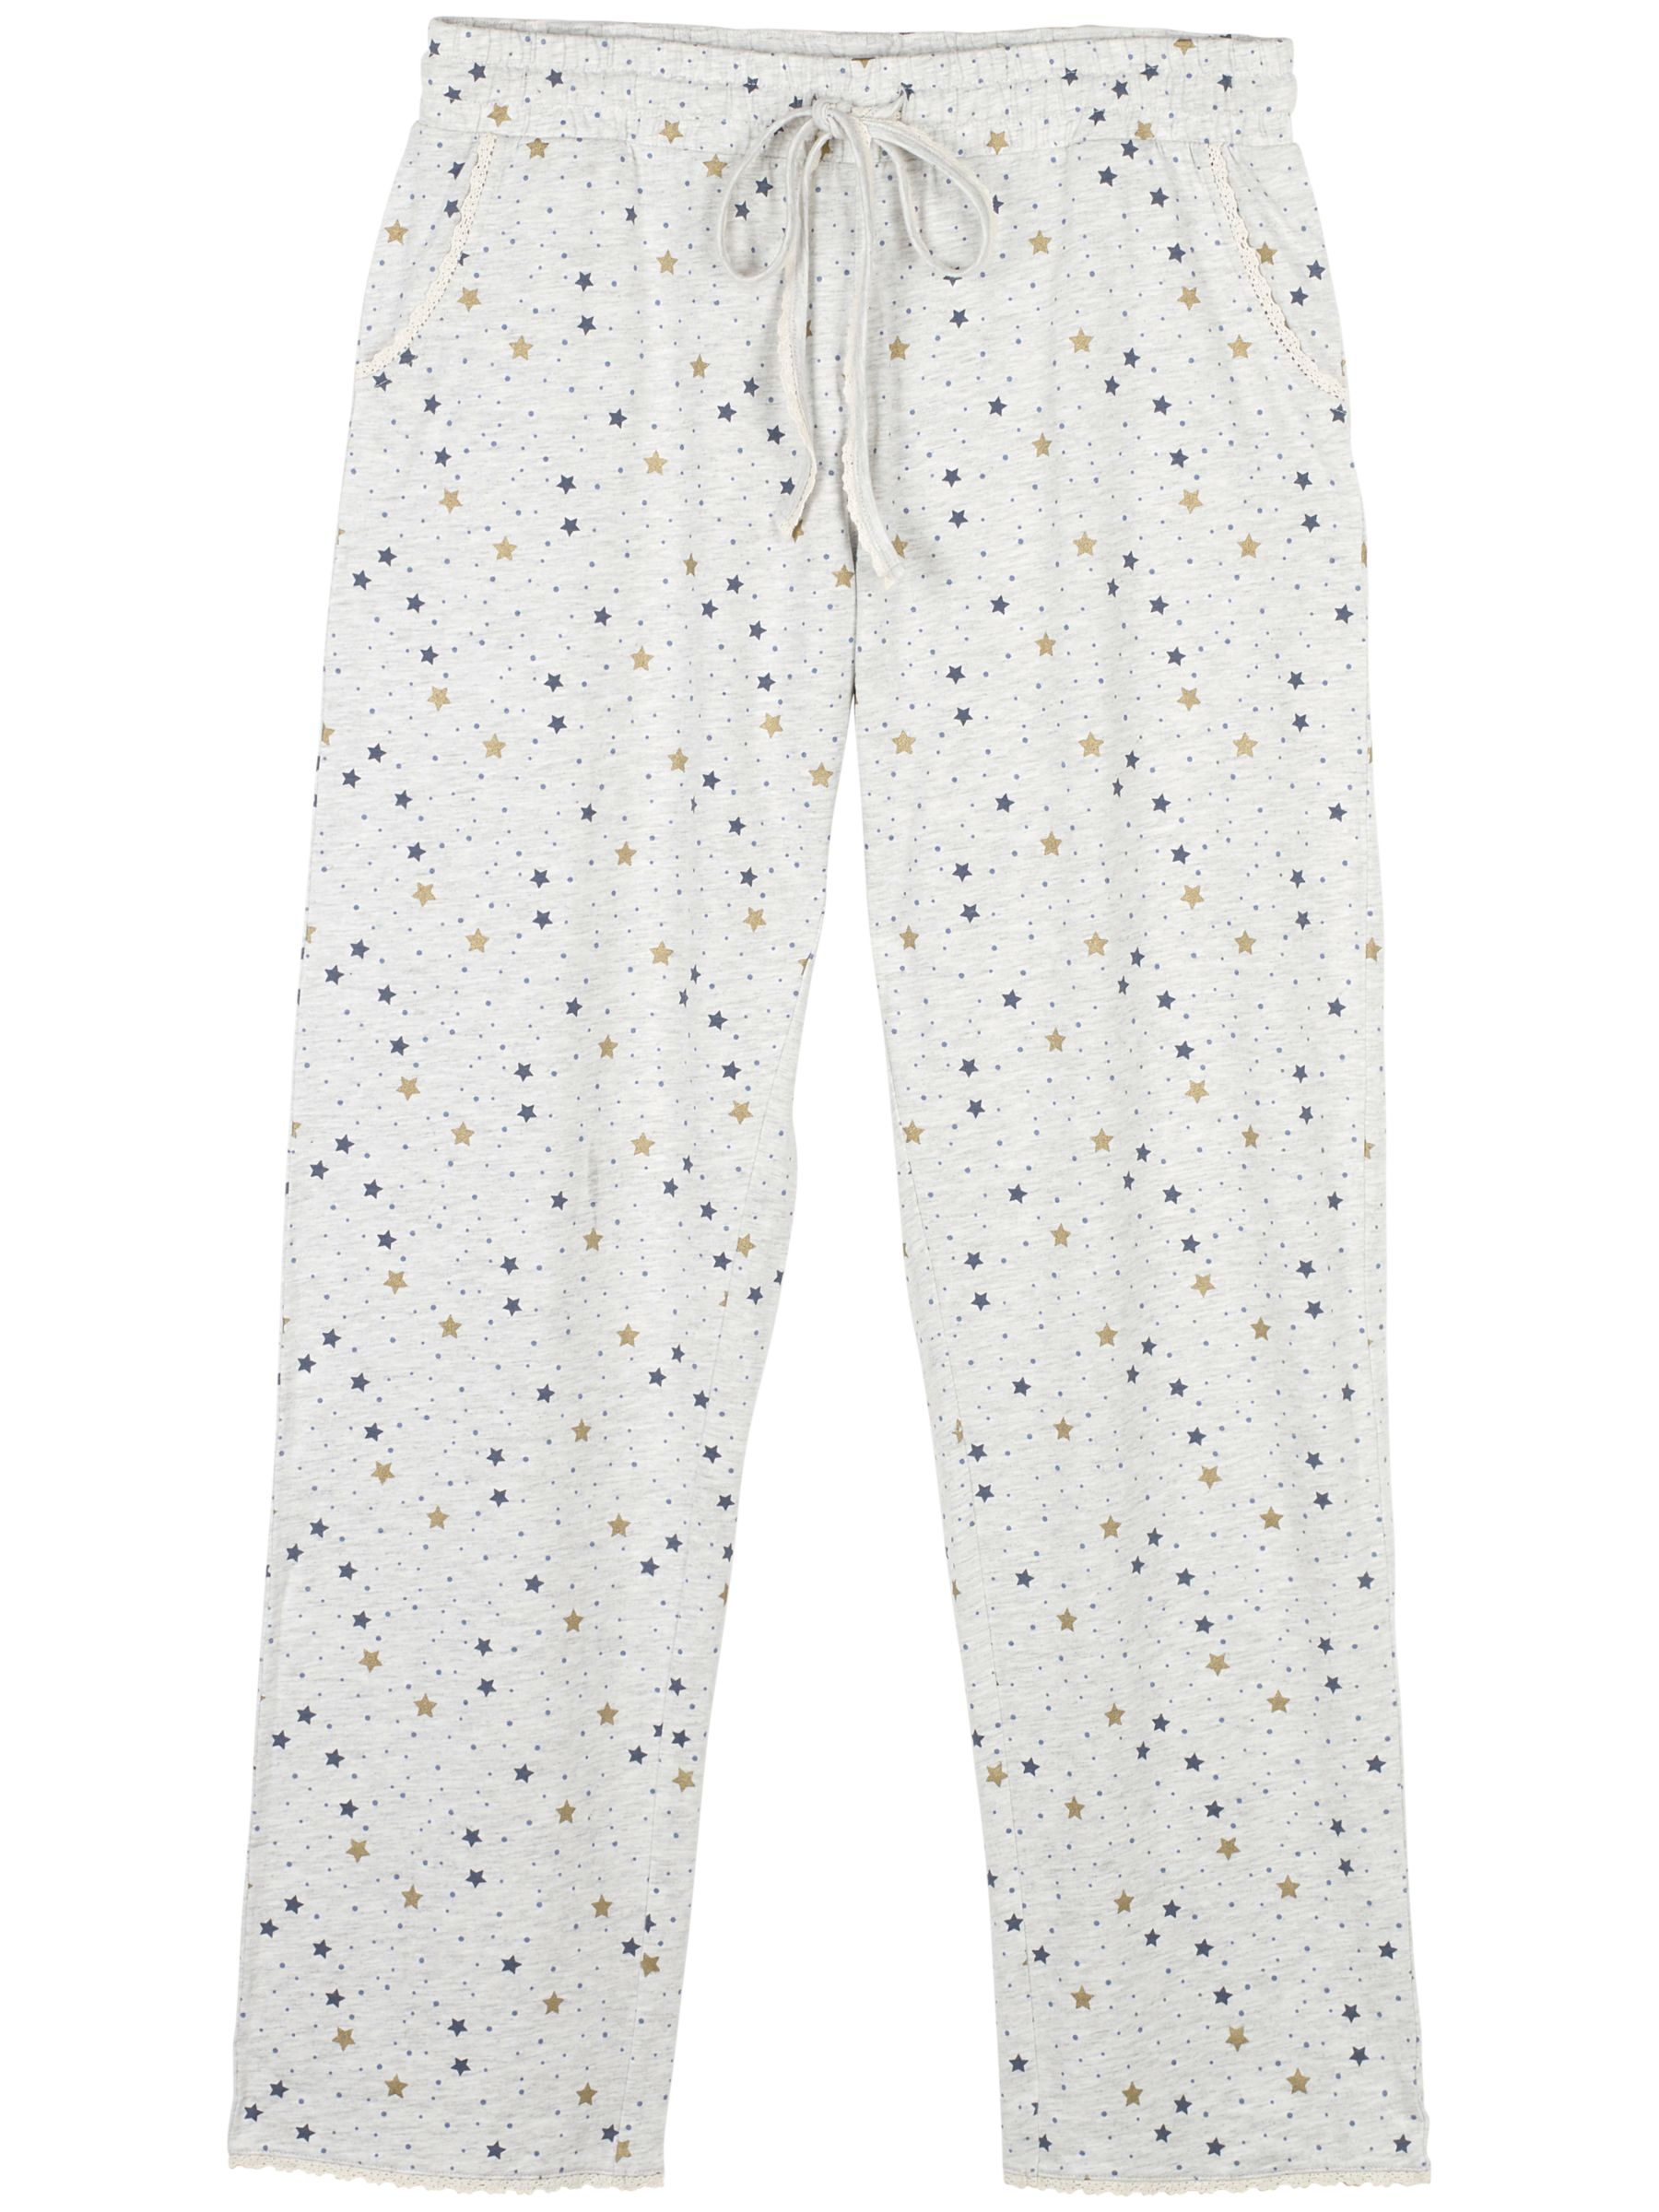 Pyjama Bottoms | Women's Nightwear | John Lewis